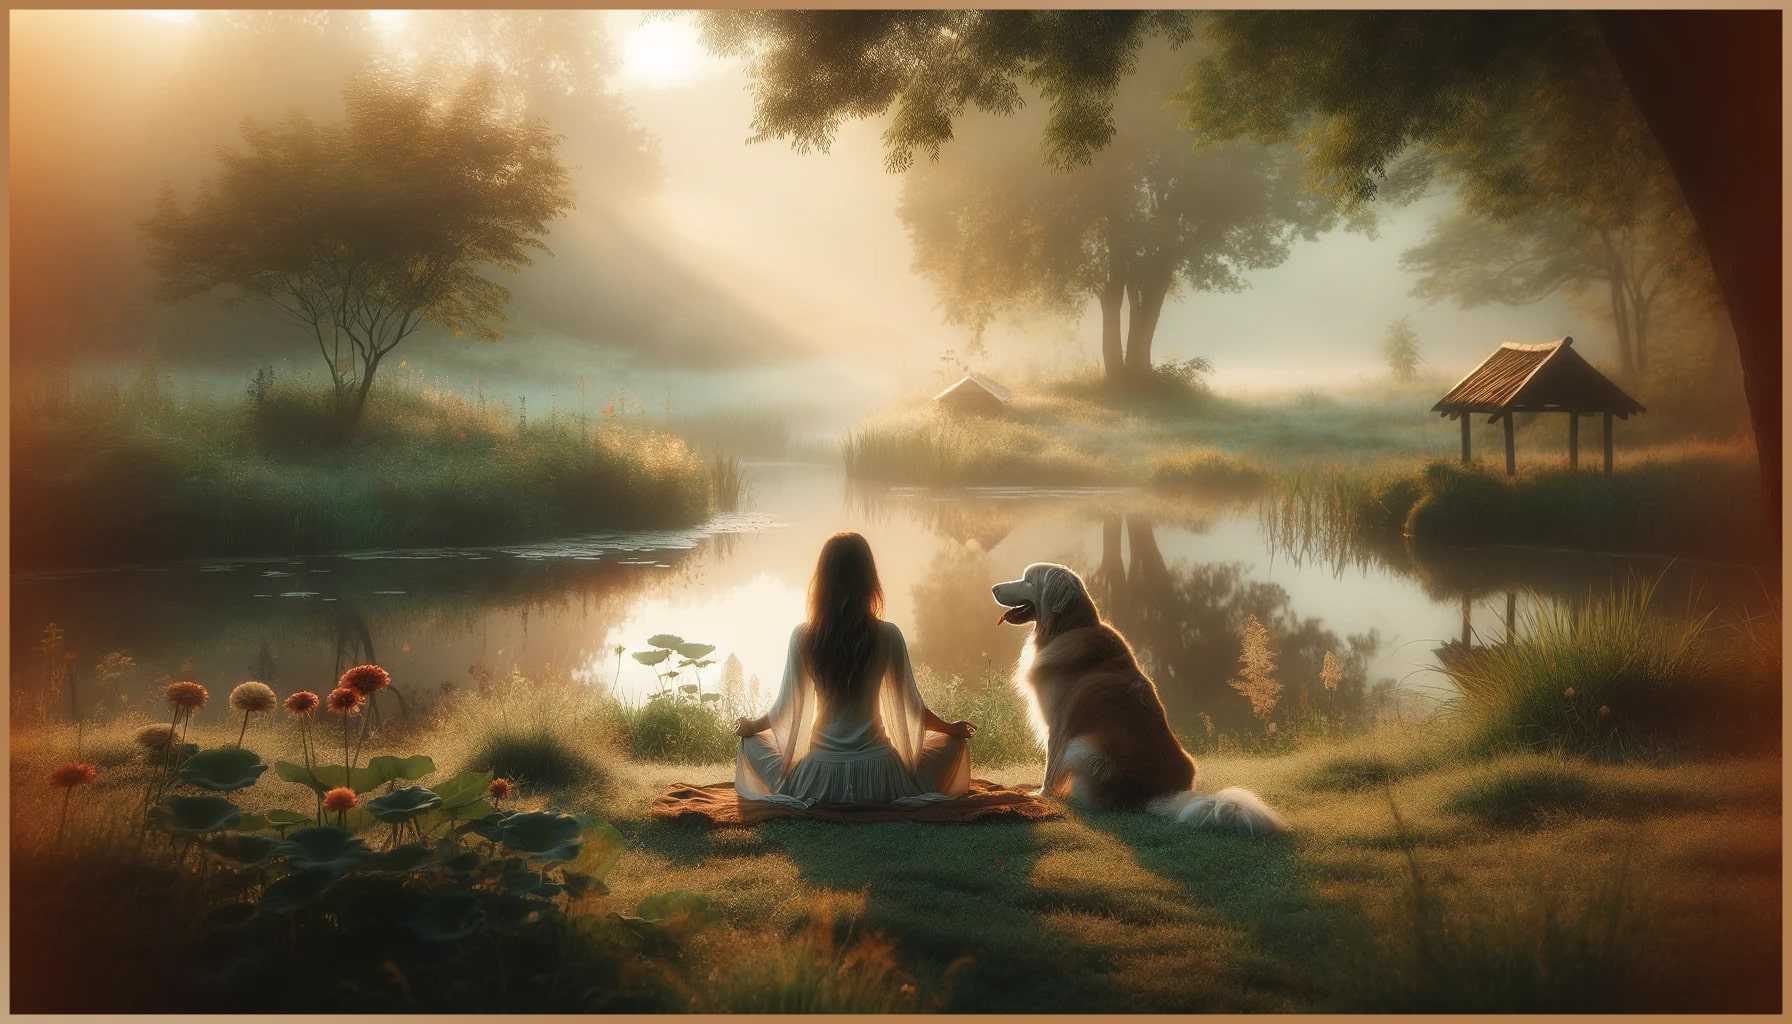 Woman and dog enjoying a serene moment by a reflective lake at sunrise.